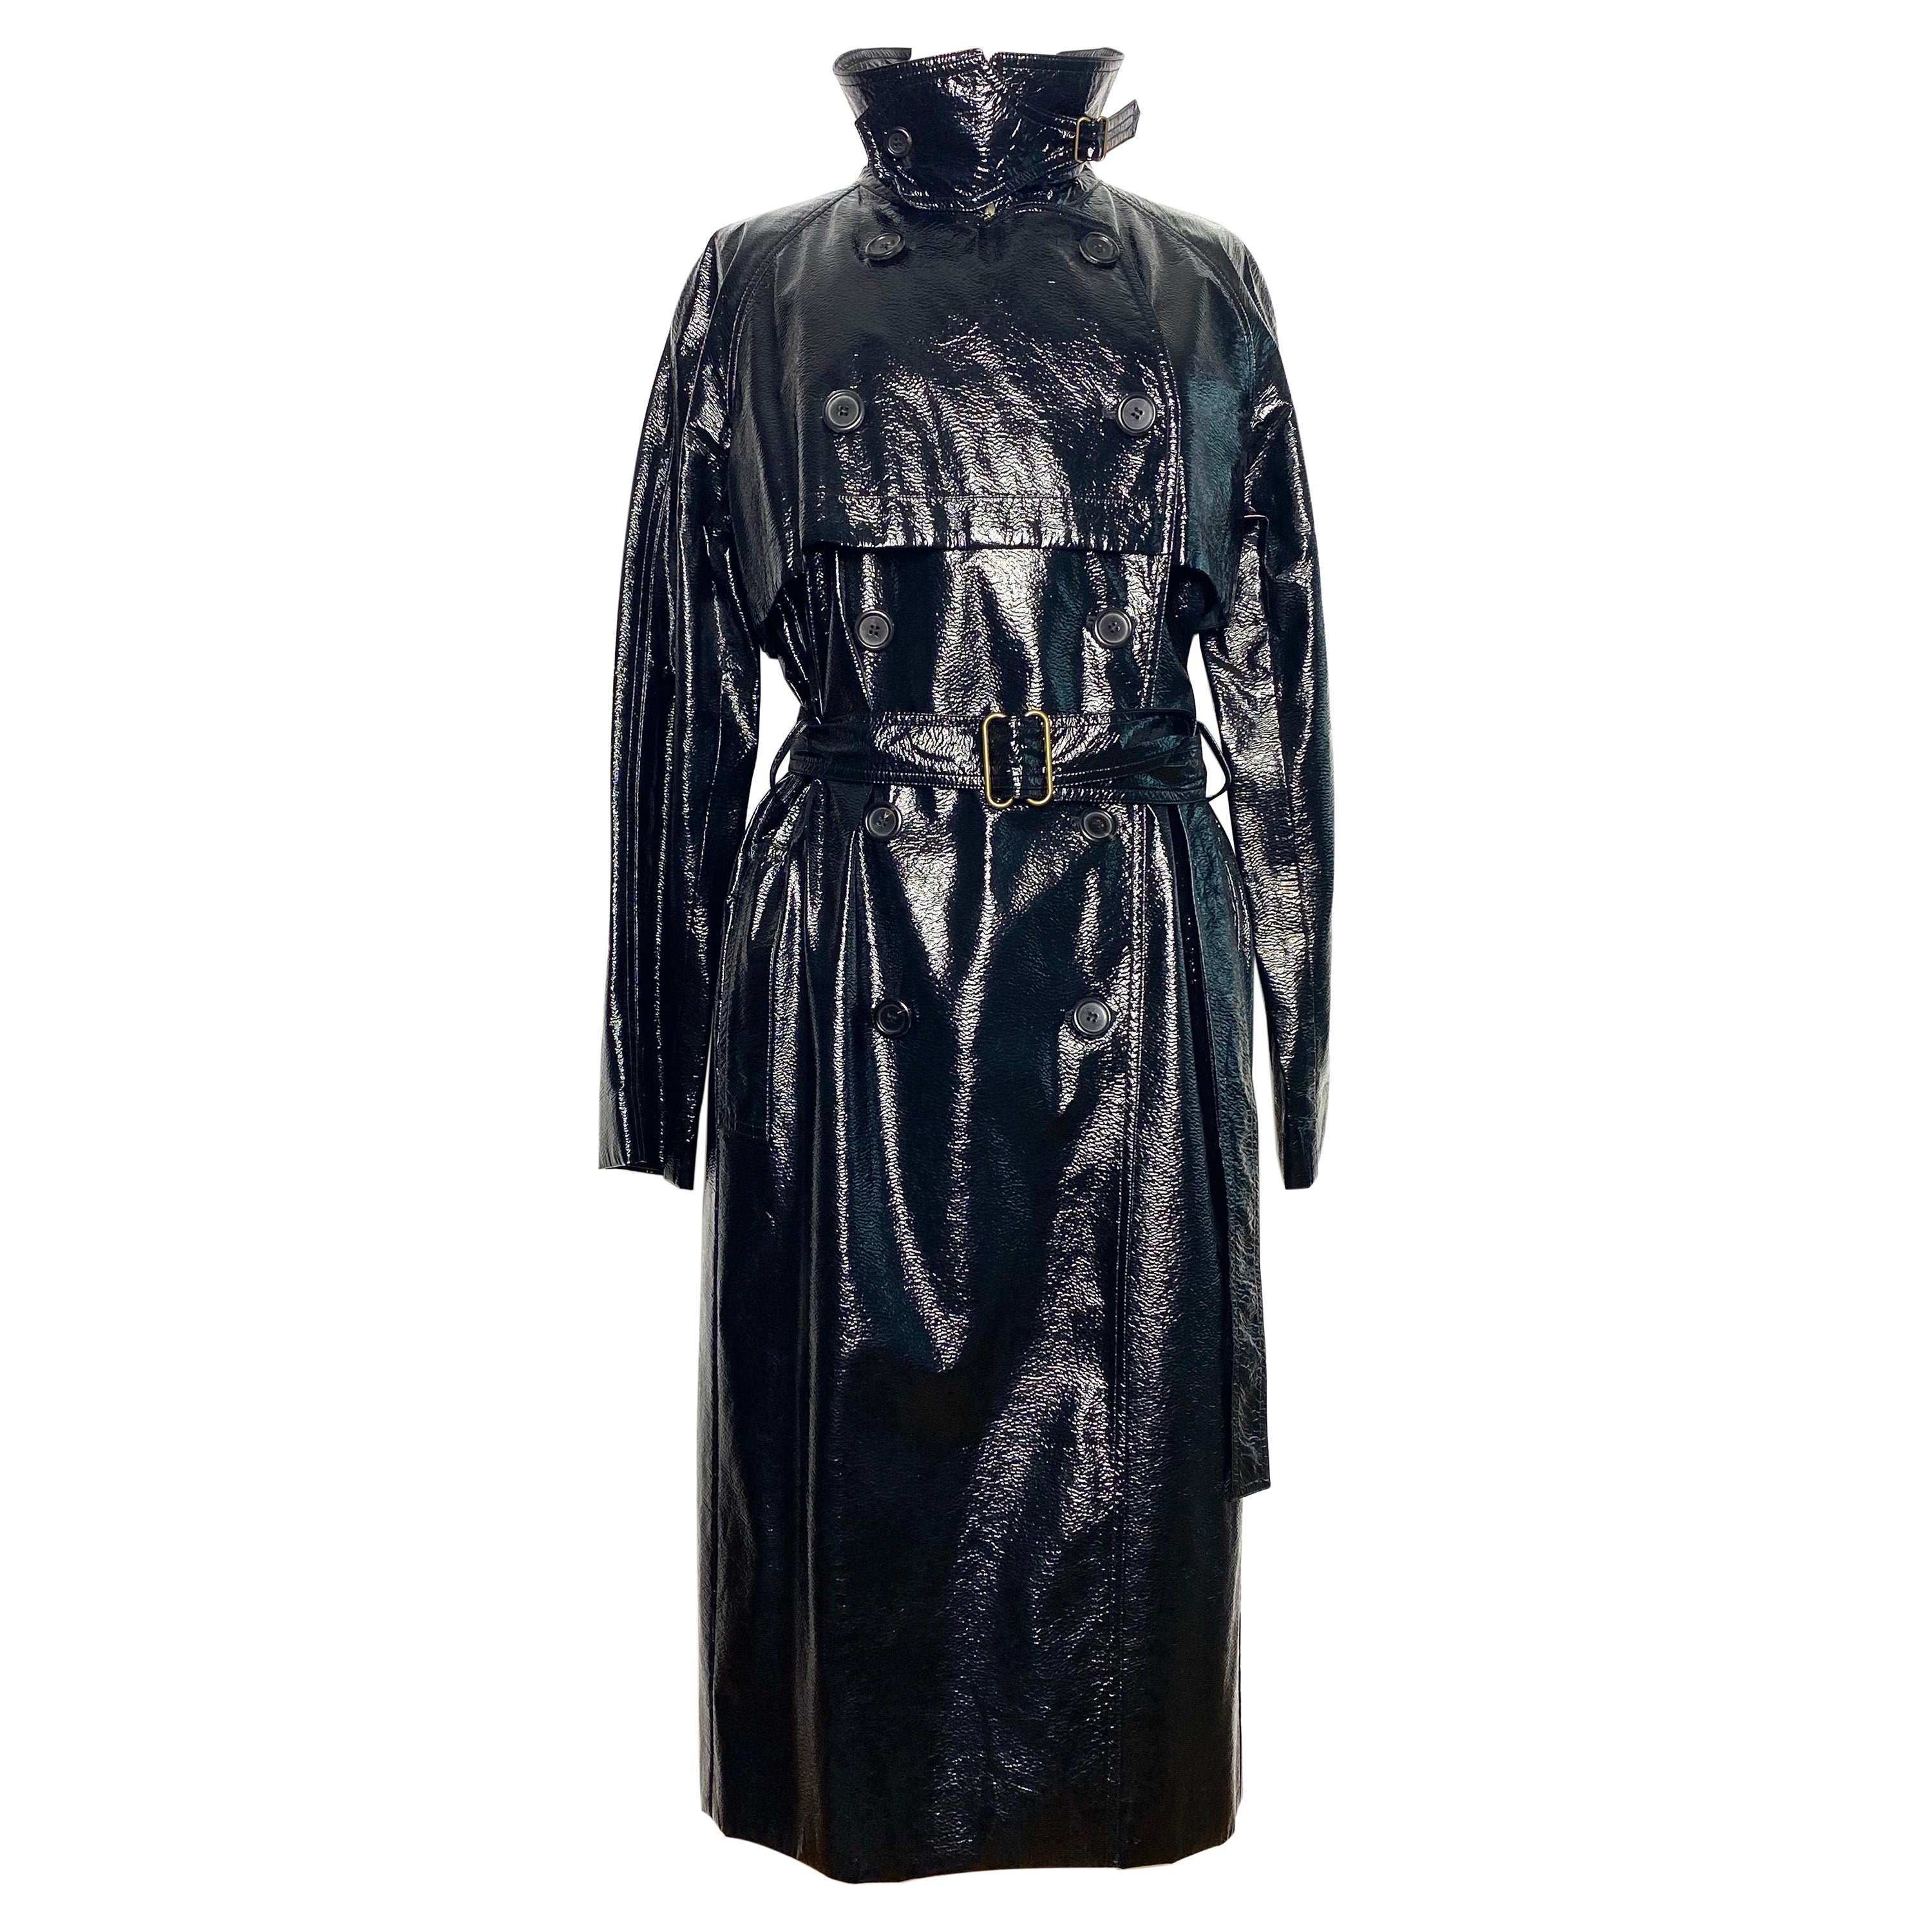 Yves saint laurent trench coat circa 1990 black patent